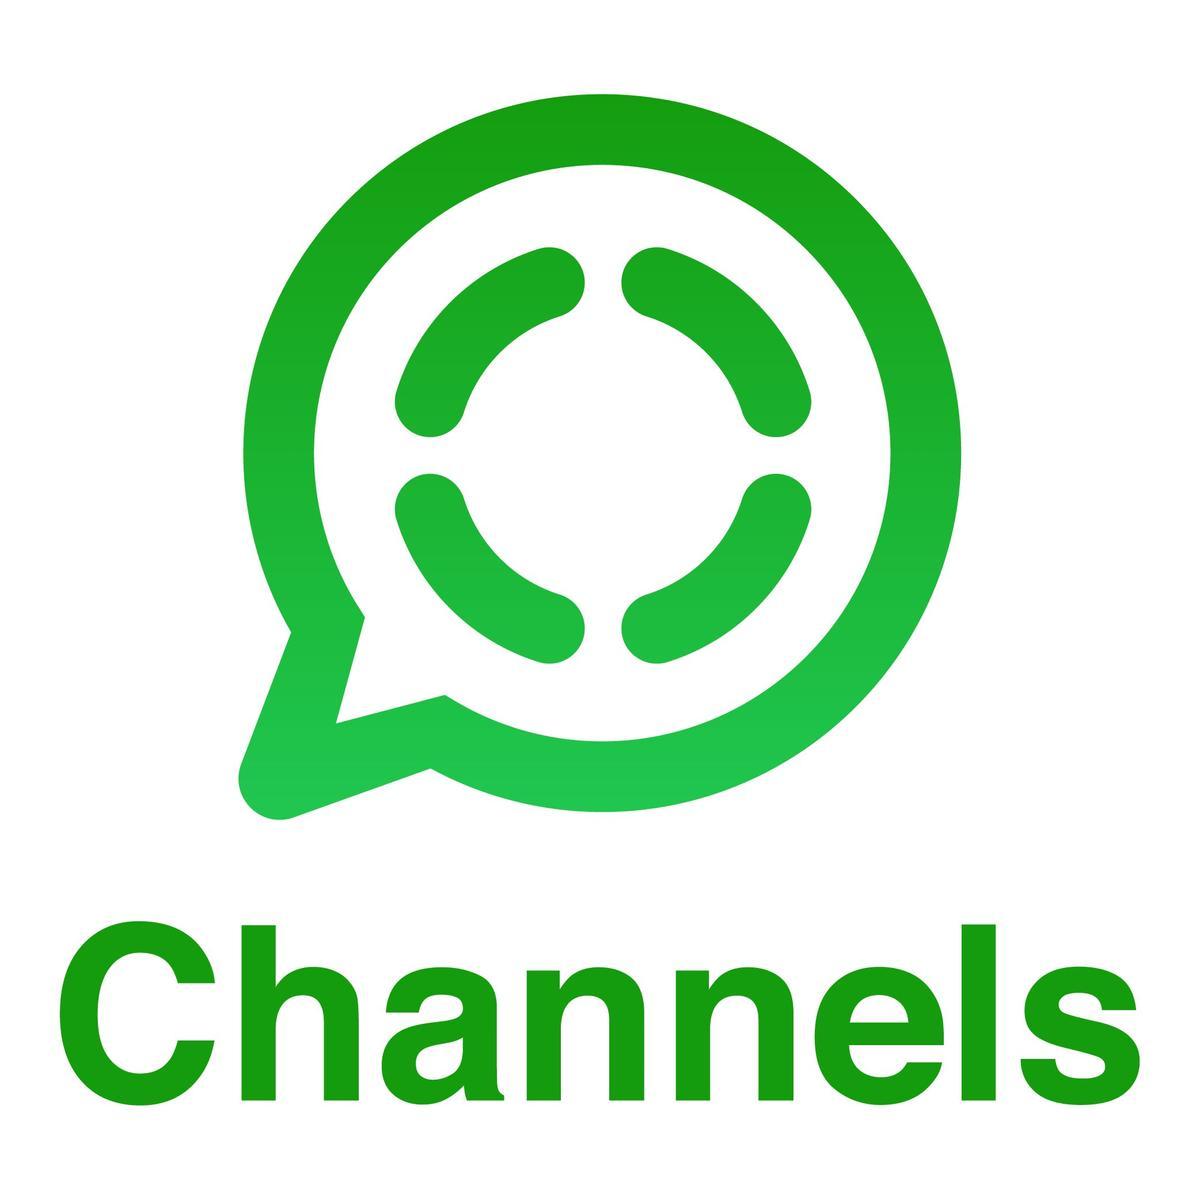 Das Logo der WhatsApp-Kanäle.